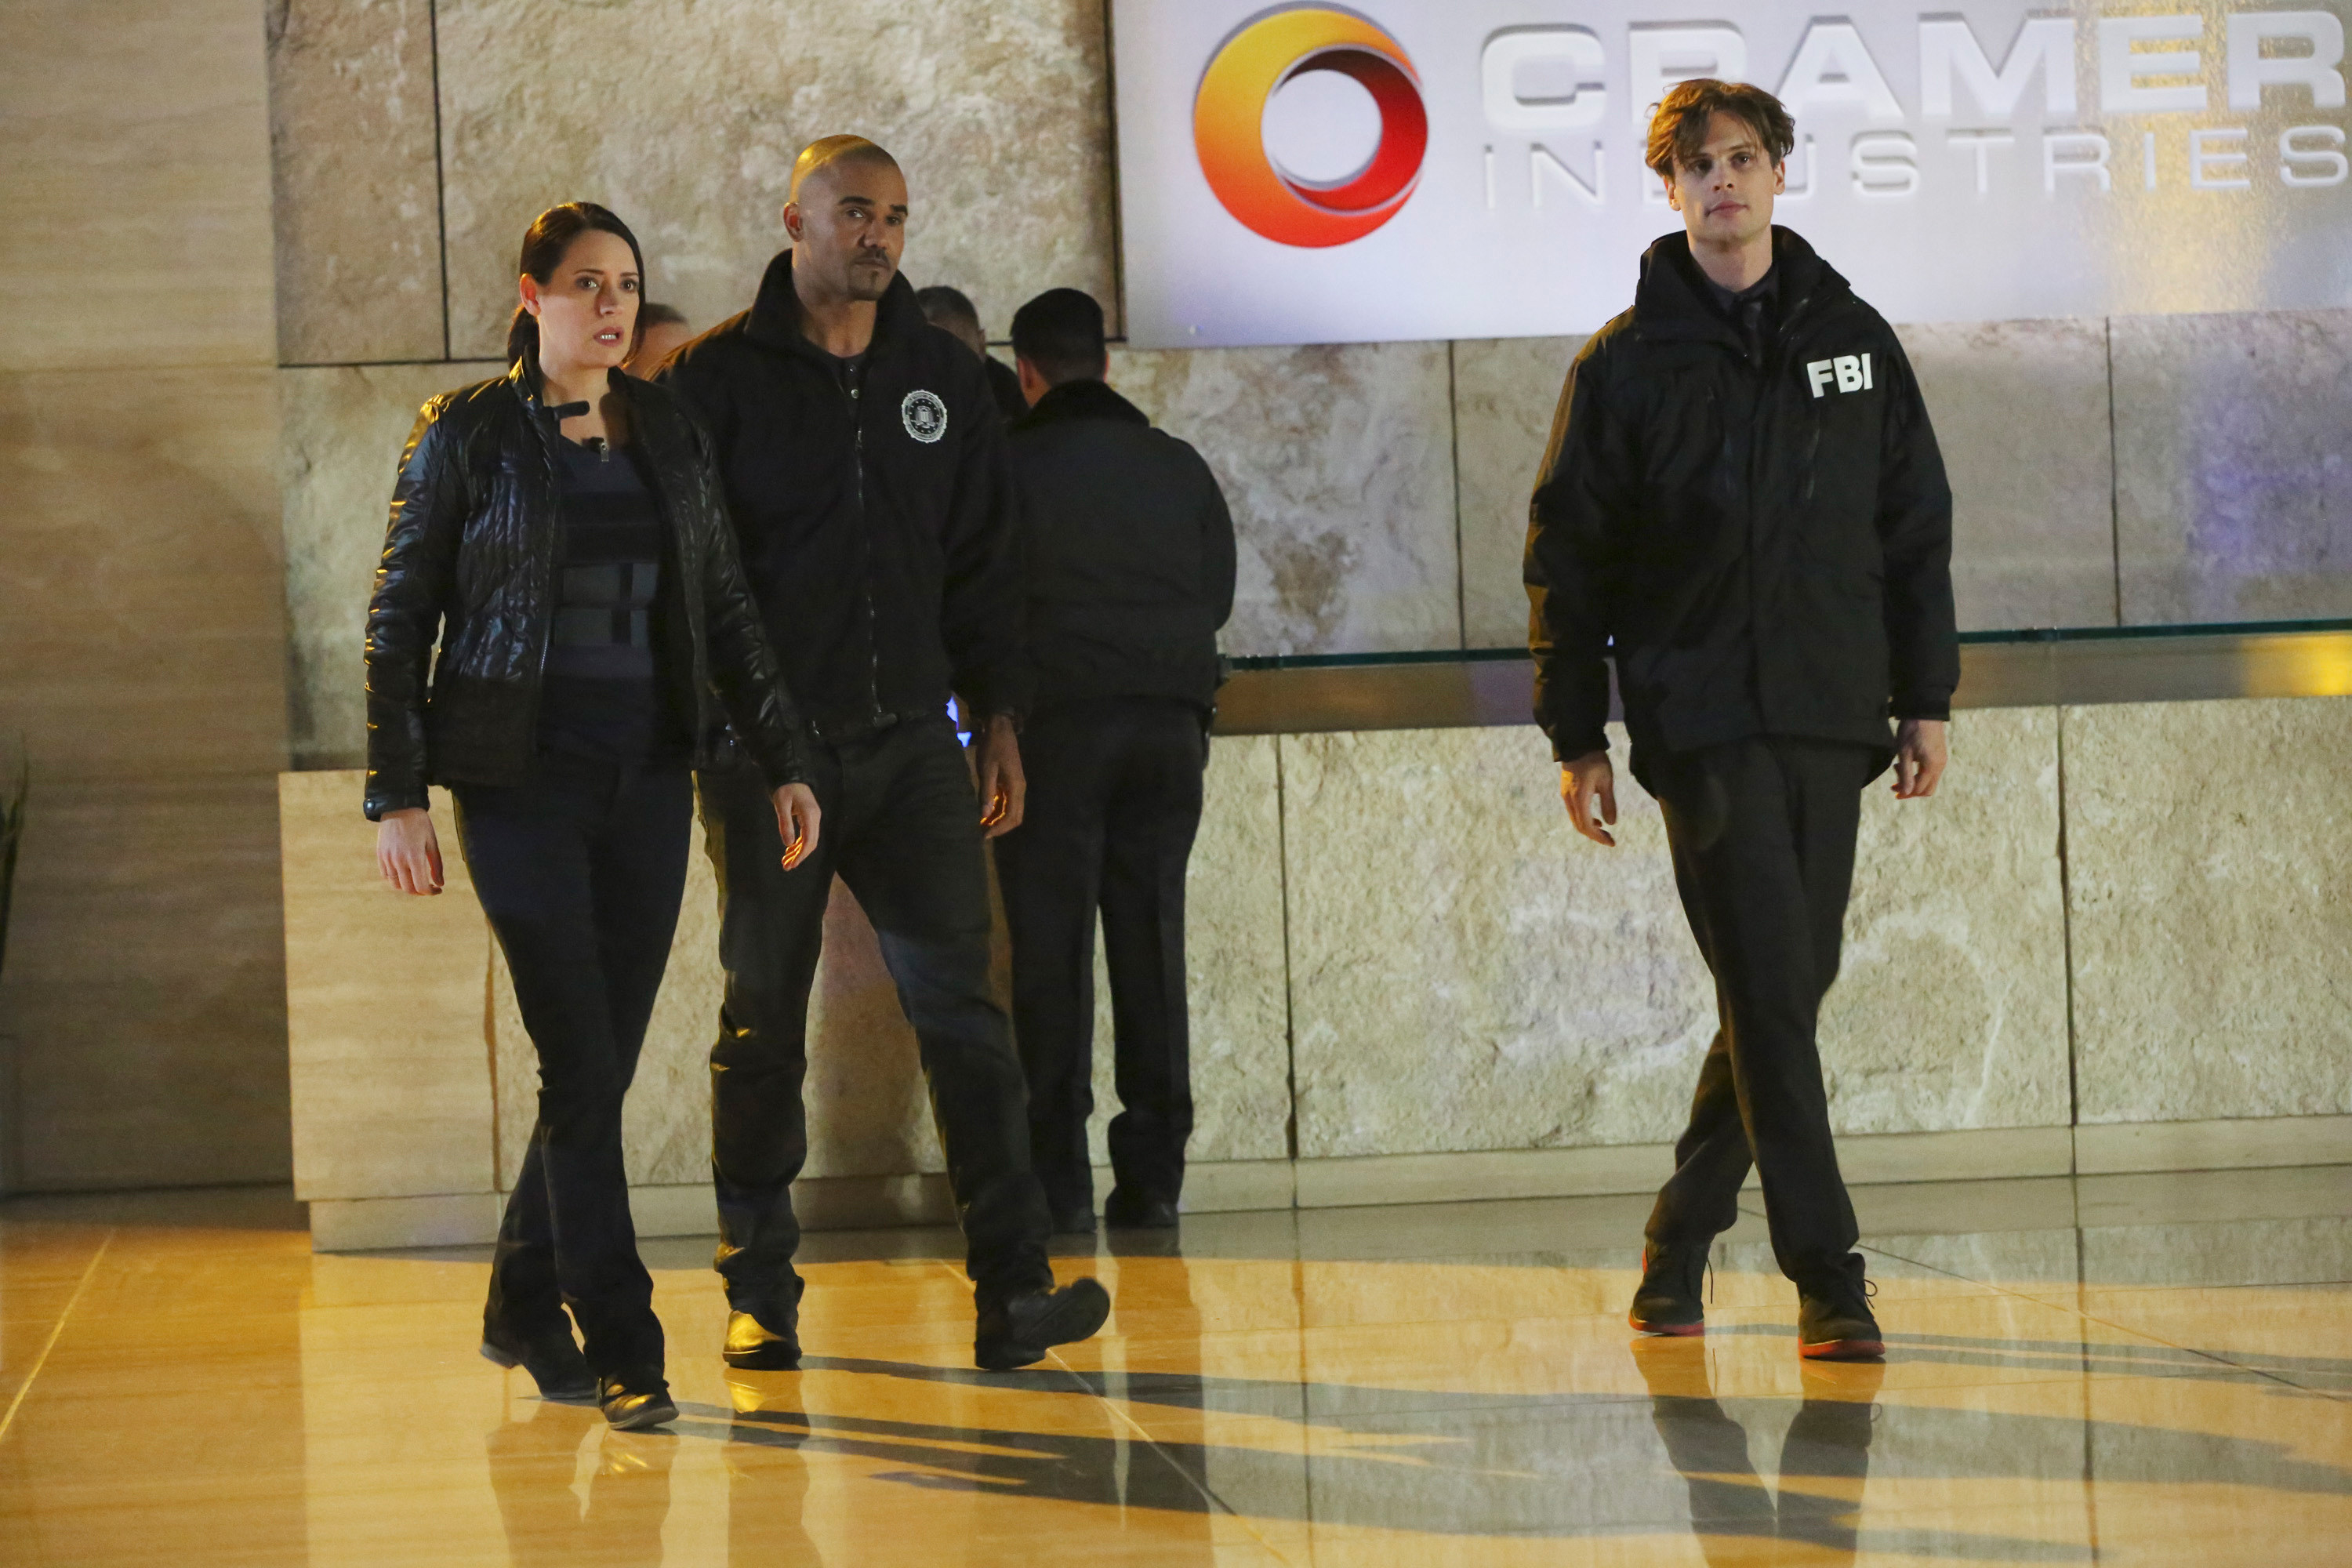 Derek, Prentiss, and Reid walk out in the FBI jackets